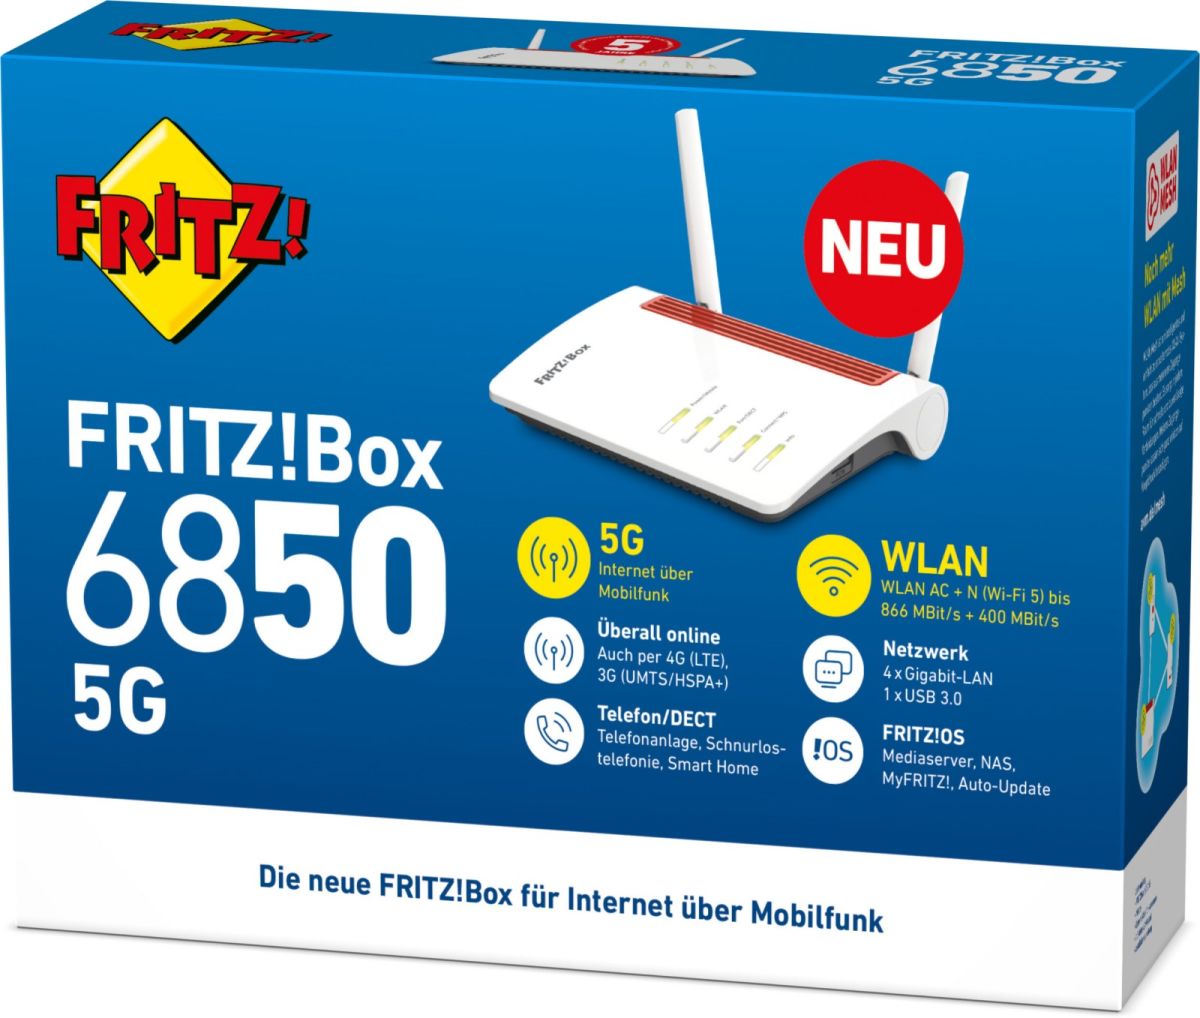 WLAN Router FRITZ!Box 6850 5G